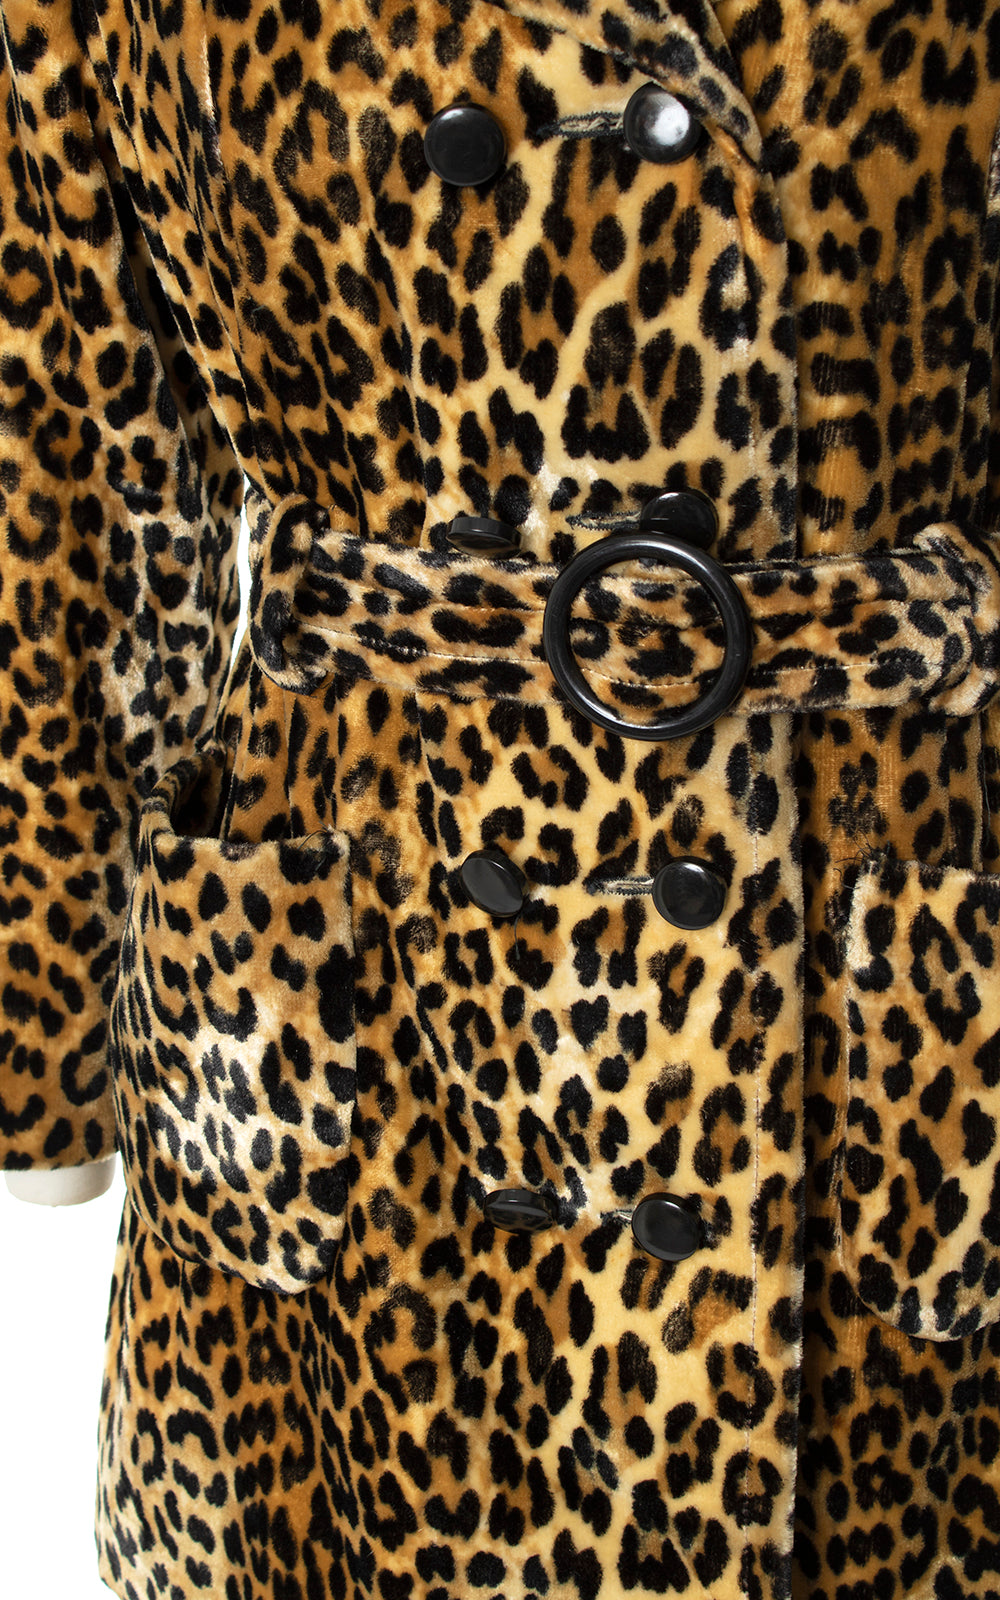 Vintage 1970s 70s Leopard Print Faux Fur Belted Coat Birthday Life Vintage